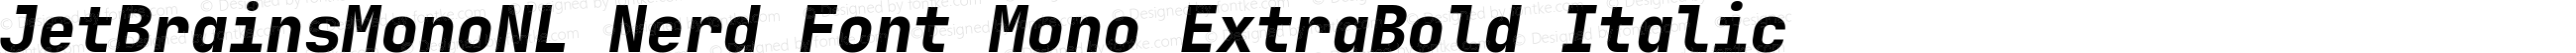 JetBrains Mono NL ExtraBold Italic Nerd Font Complete Mono